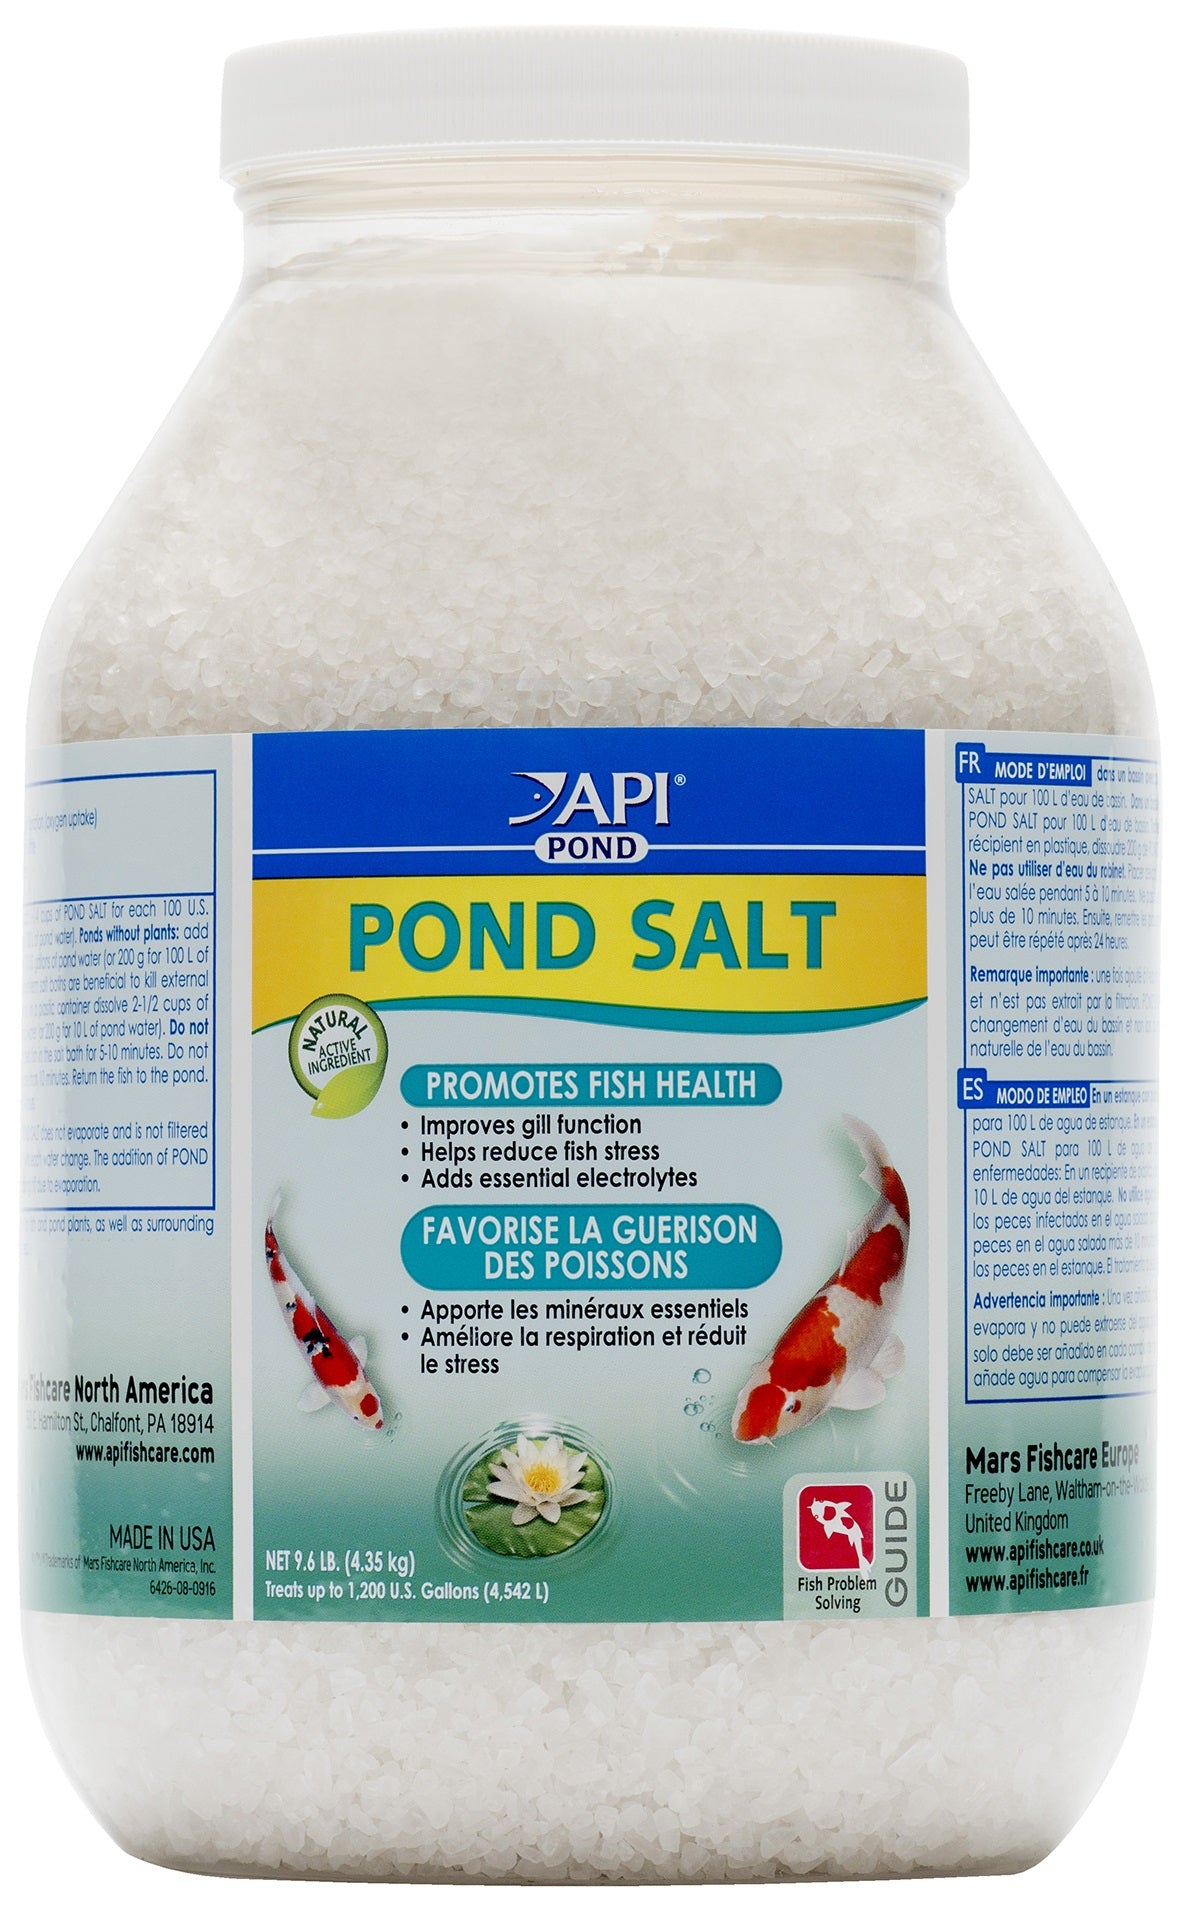 API Pond Pond Salt Natural Fish Tonic for Ponds - PetMountain.com